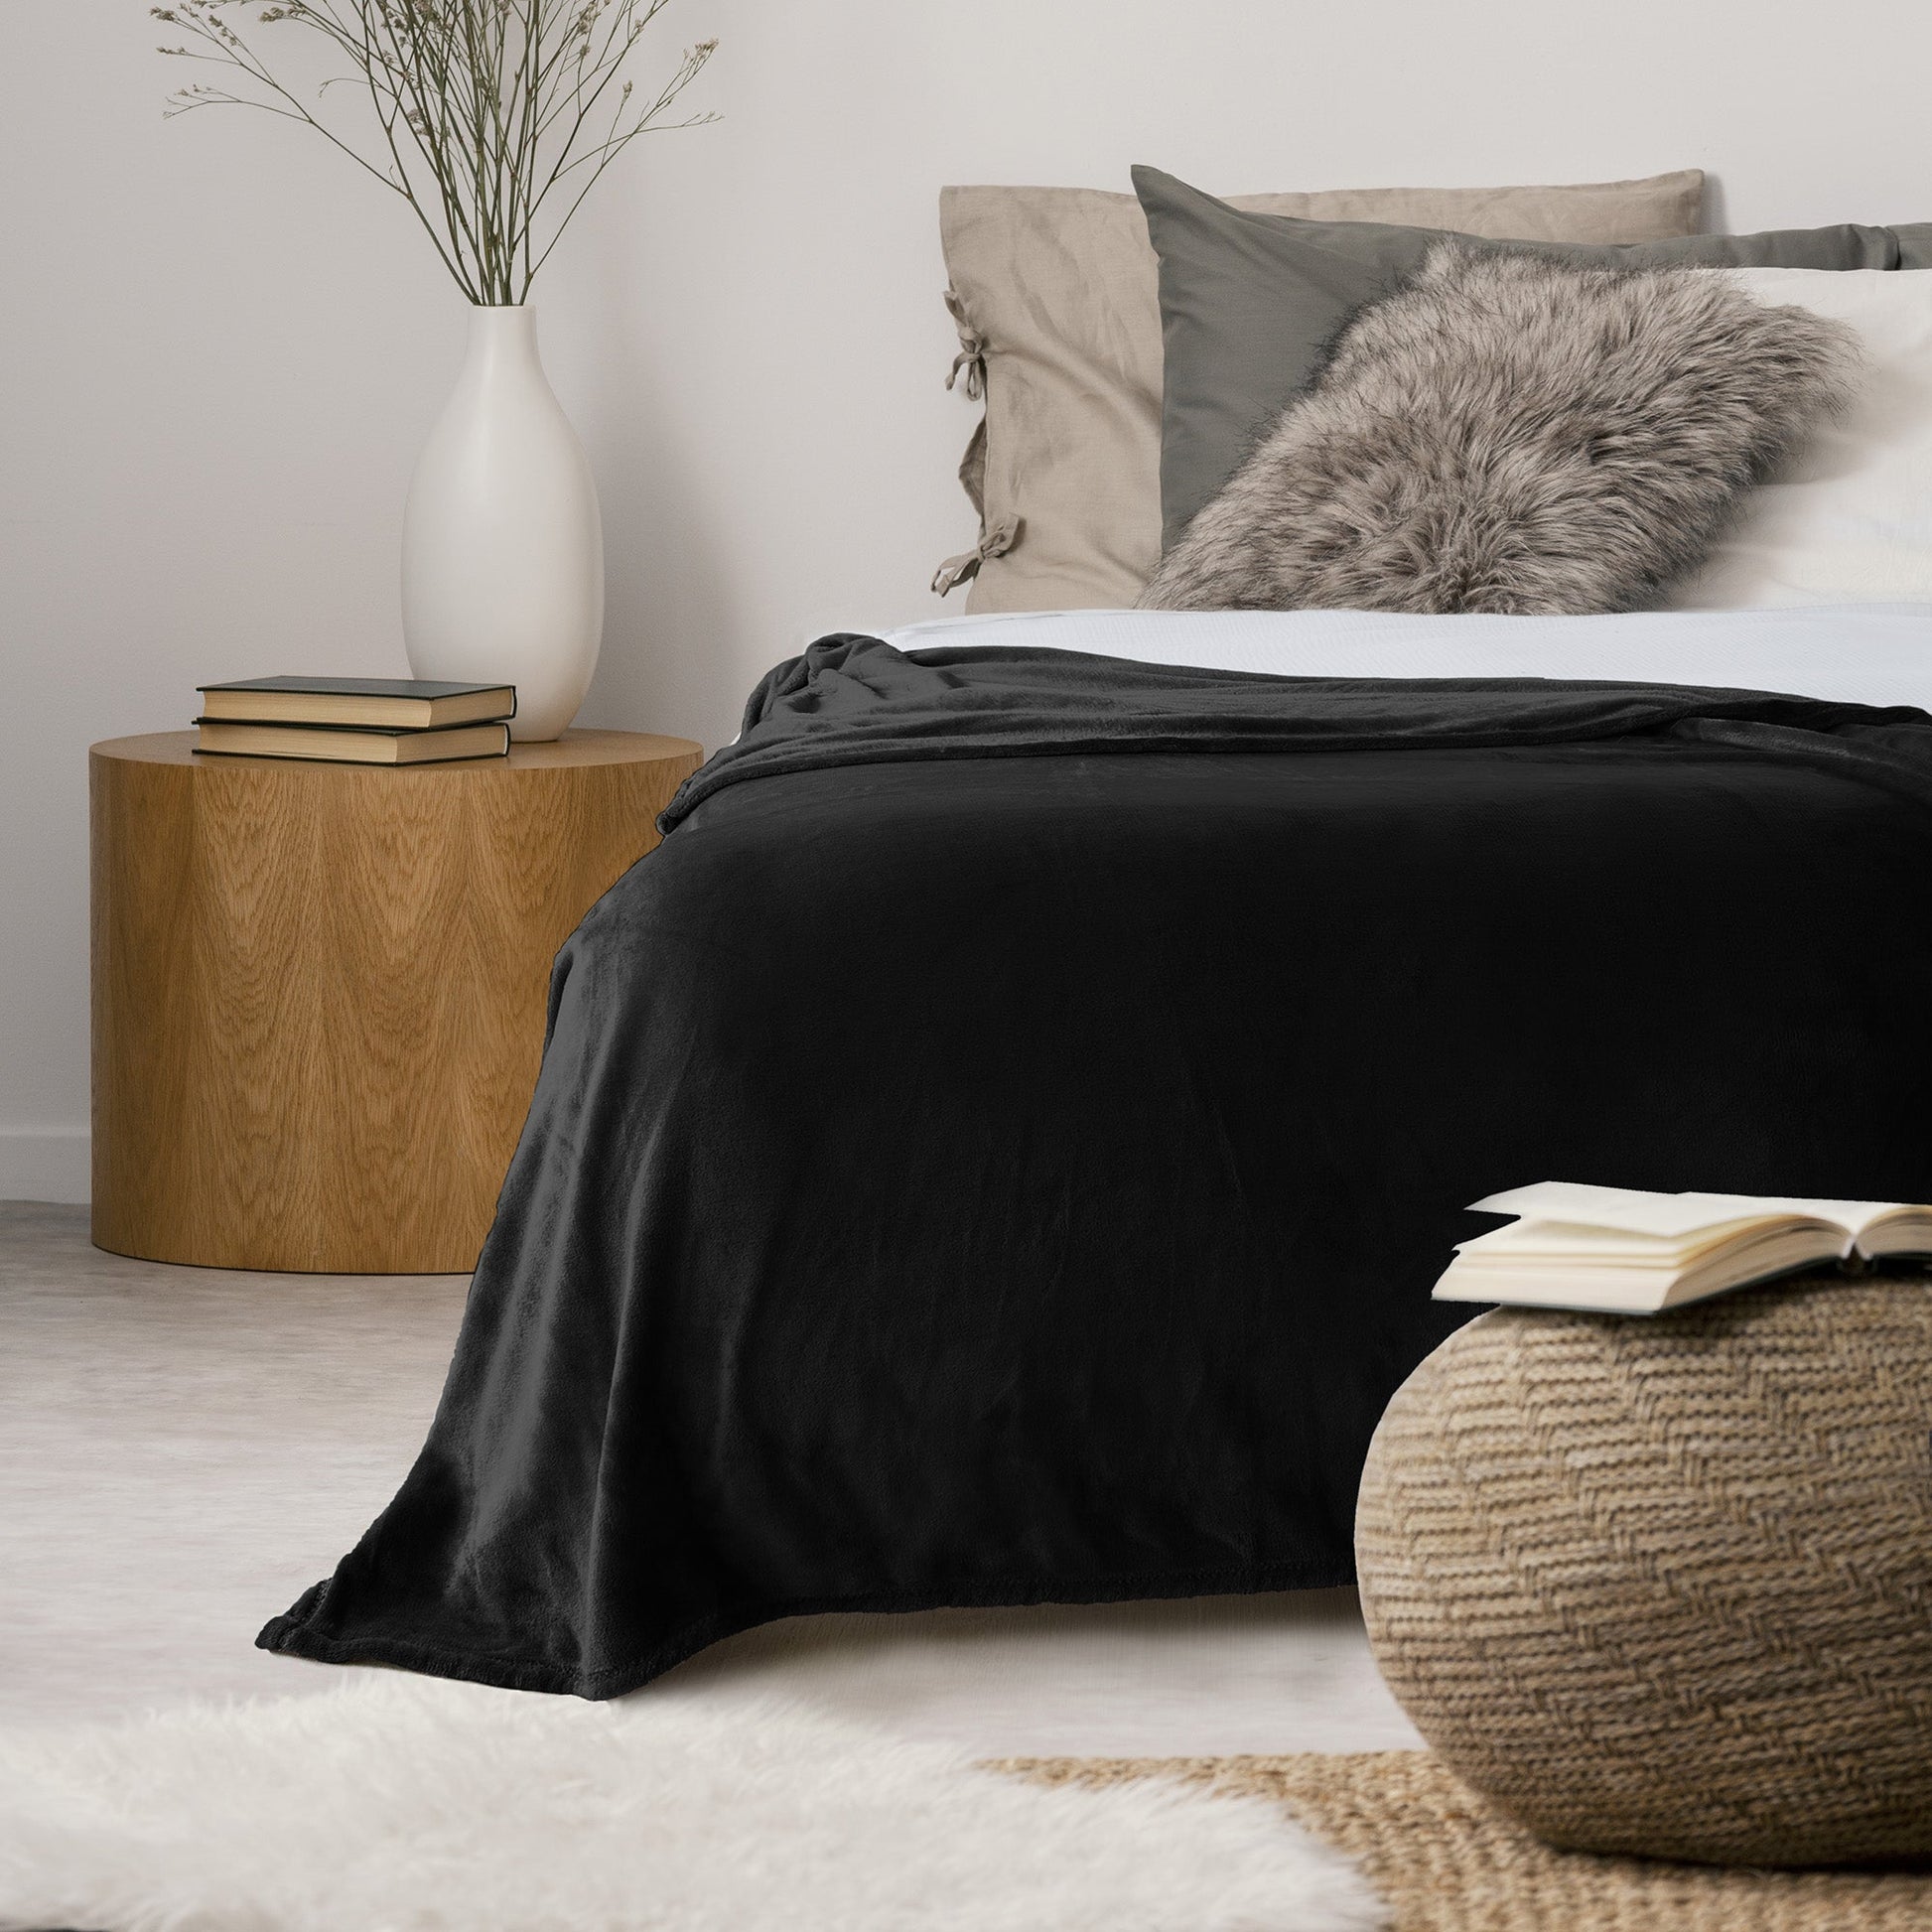 Super Soft Flannel Blanket Throw Home Decor Bedding 60X80 Black - DecoElegance - Blanket Throw Home Bedding